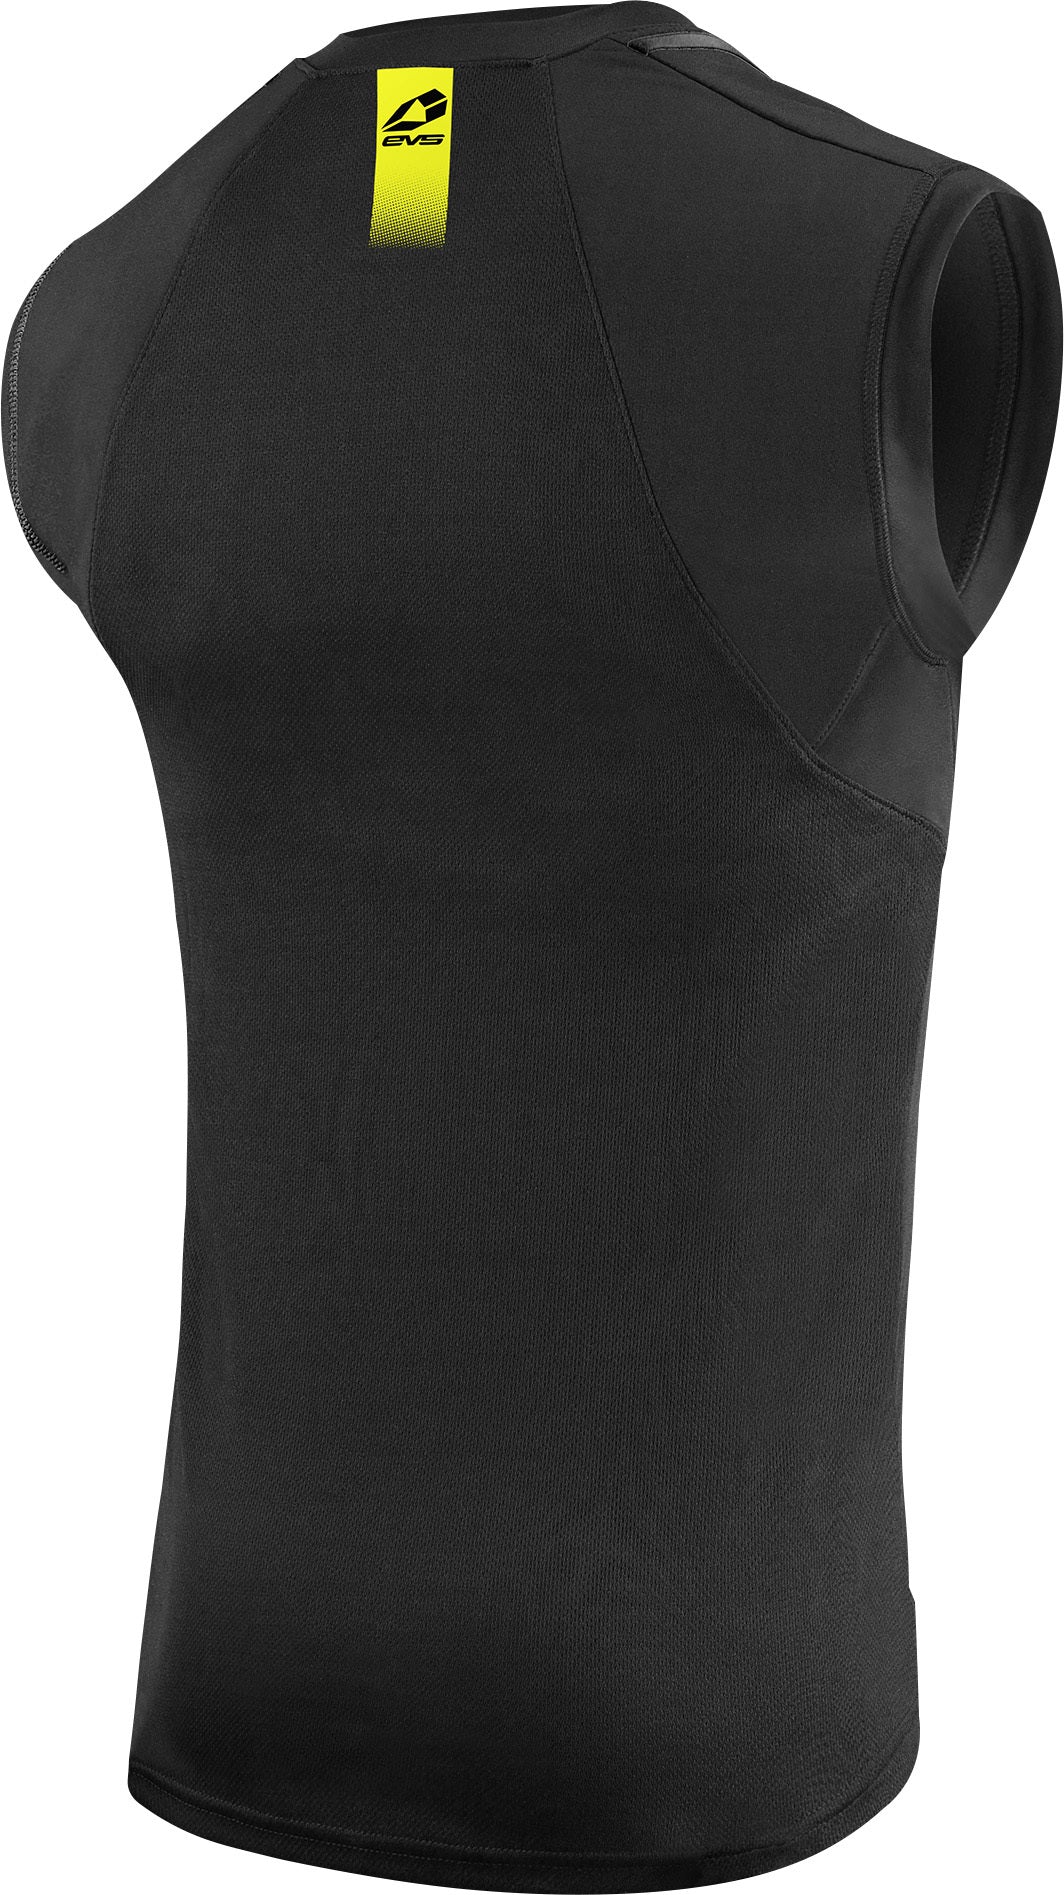 Sleeveless Tug Shirt Black Sm